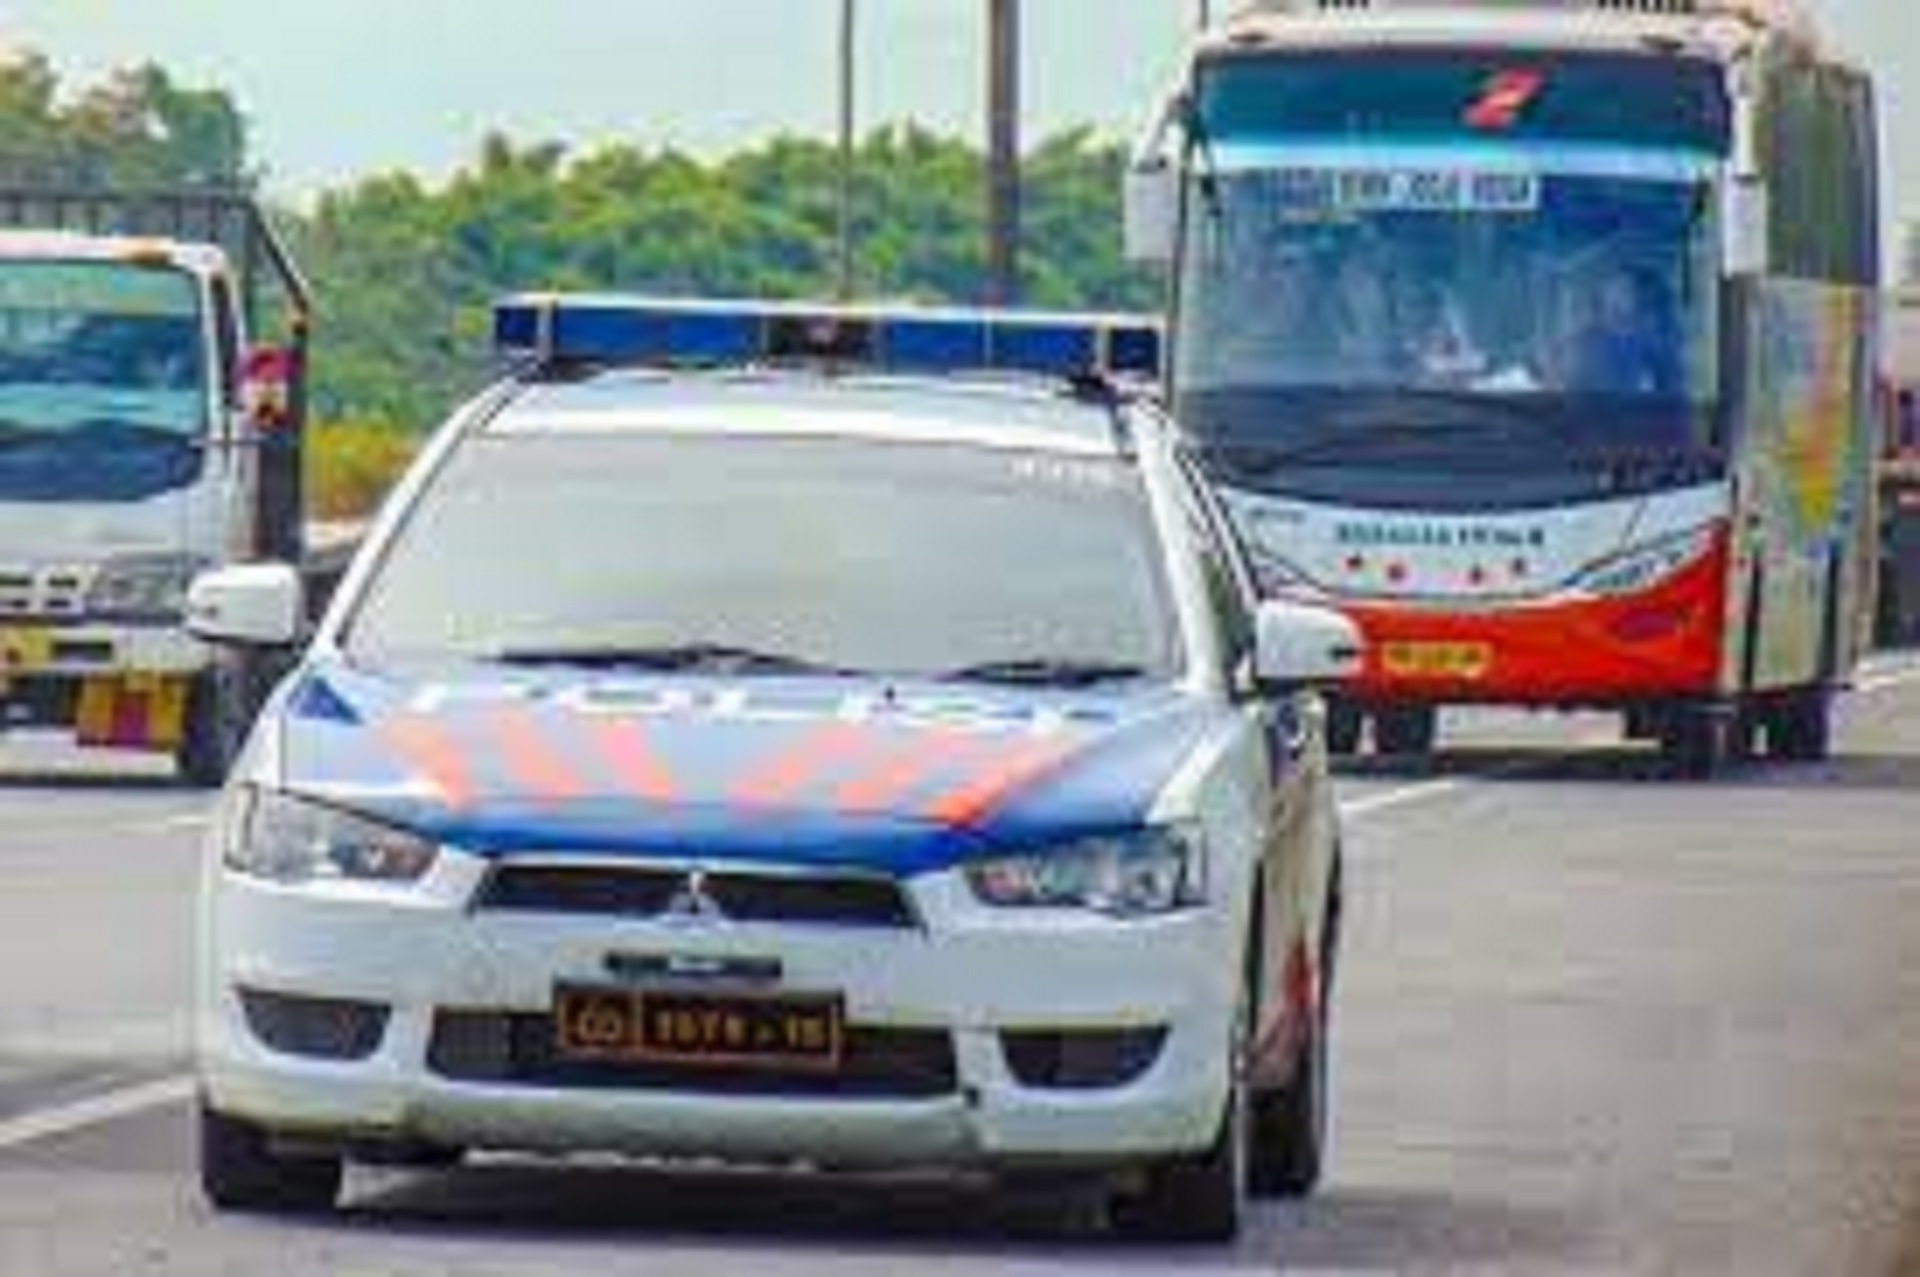 Jambret Bawa Kabur Mobil Patroli Polisi, 5 Anggota Polsek Diperiksa Propam